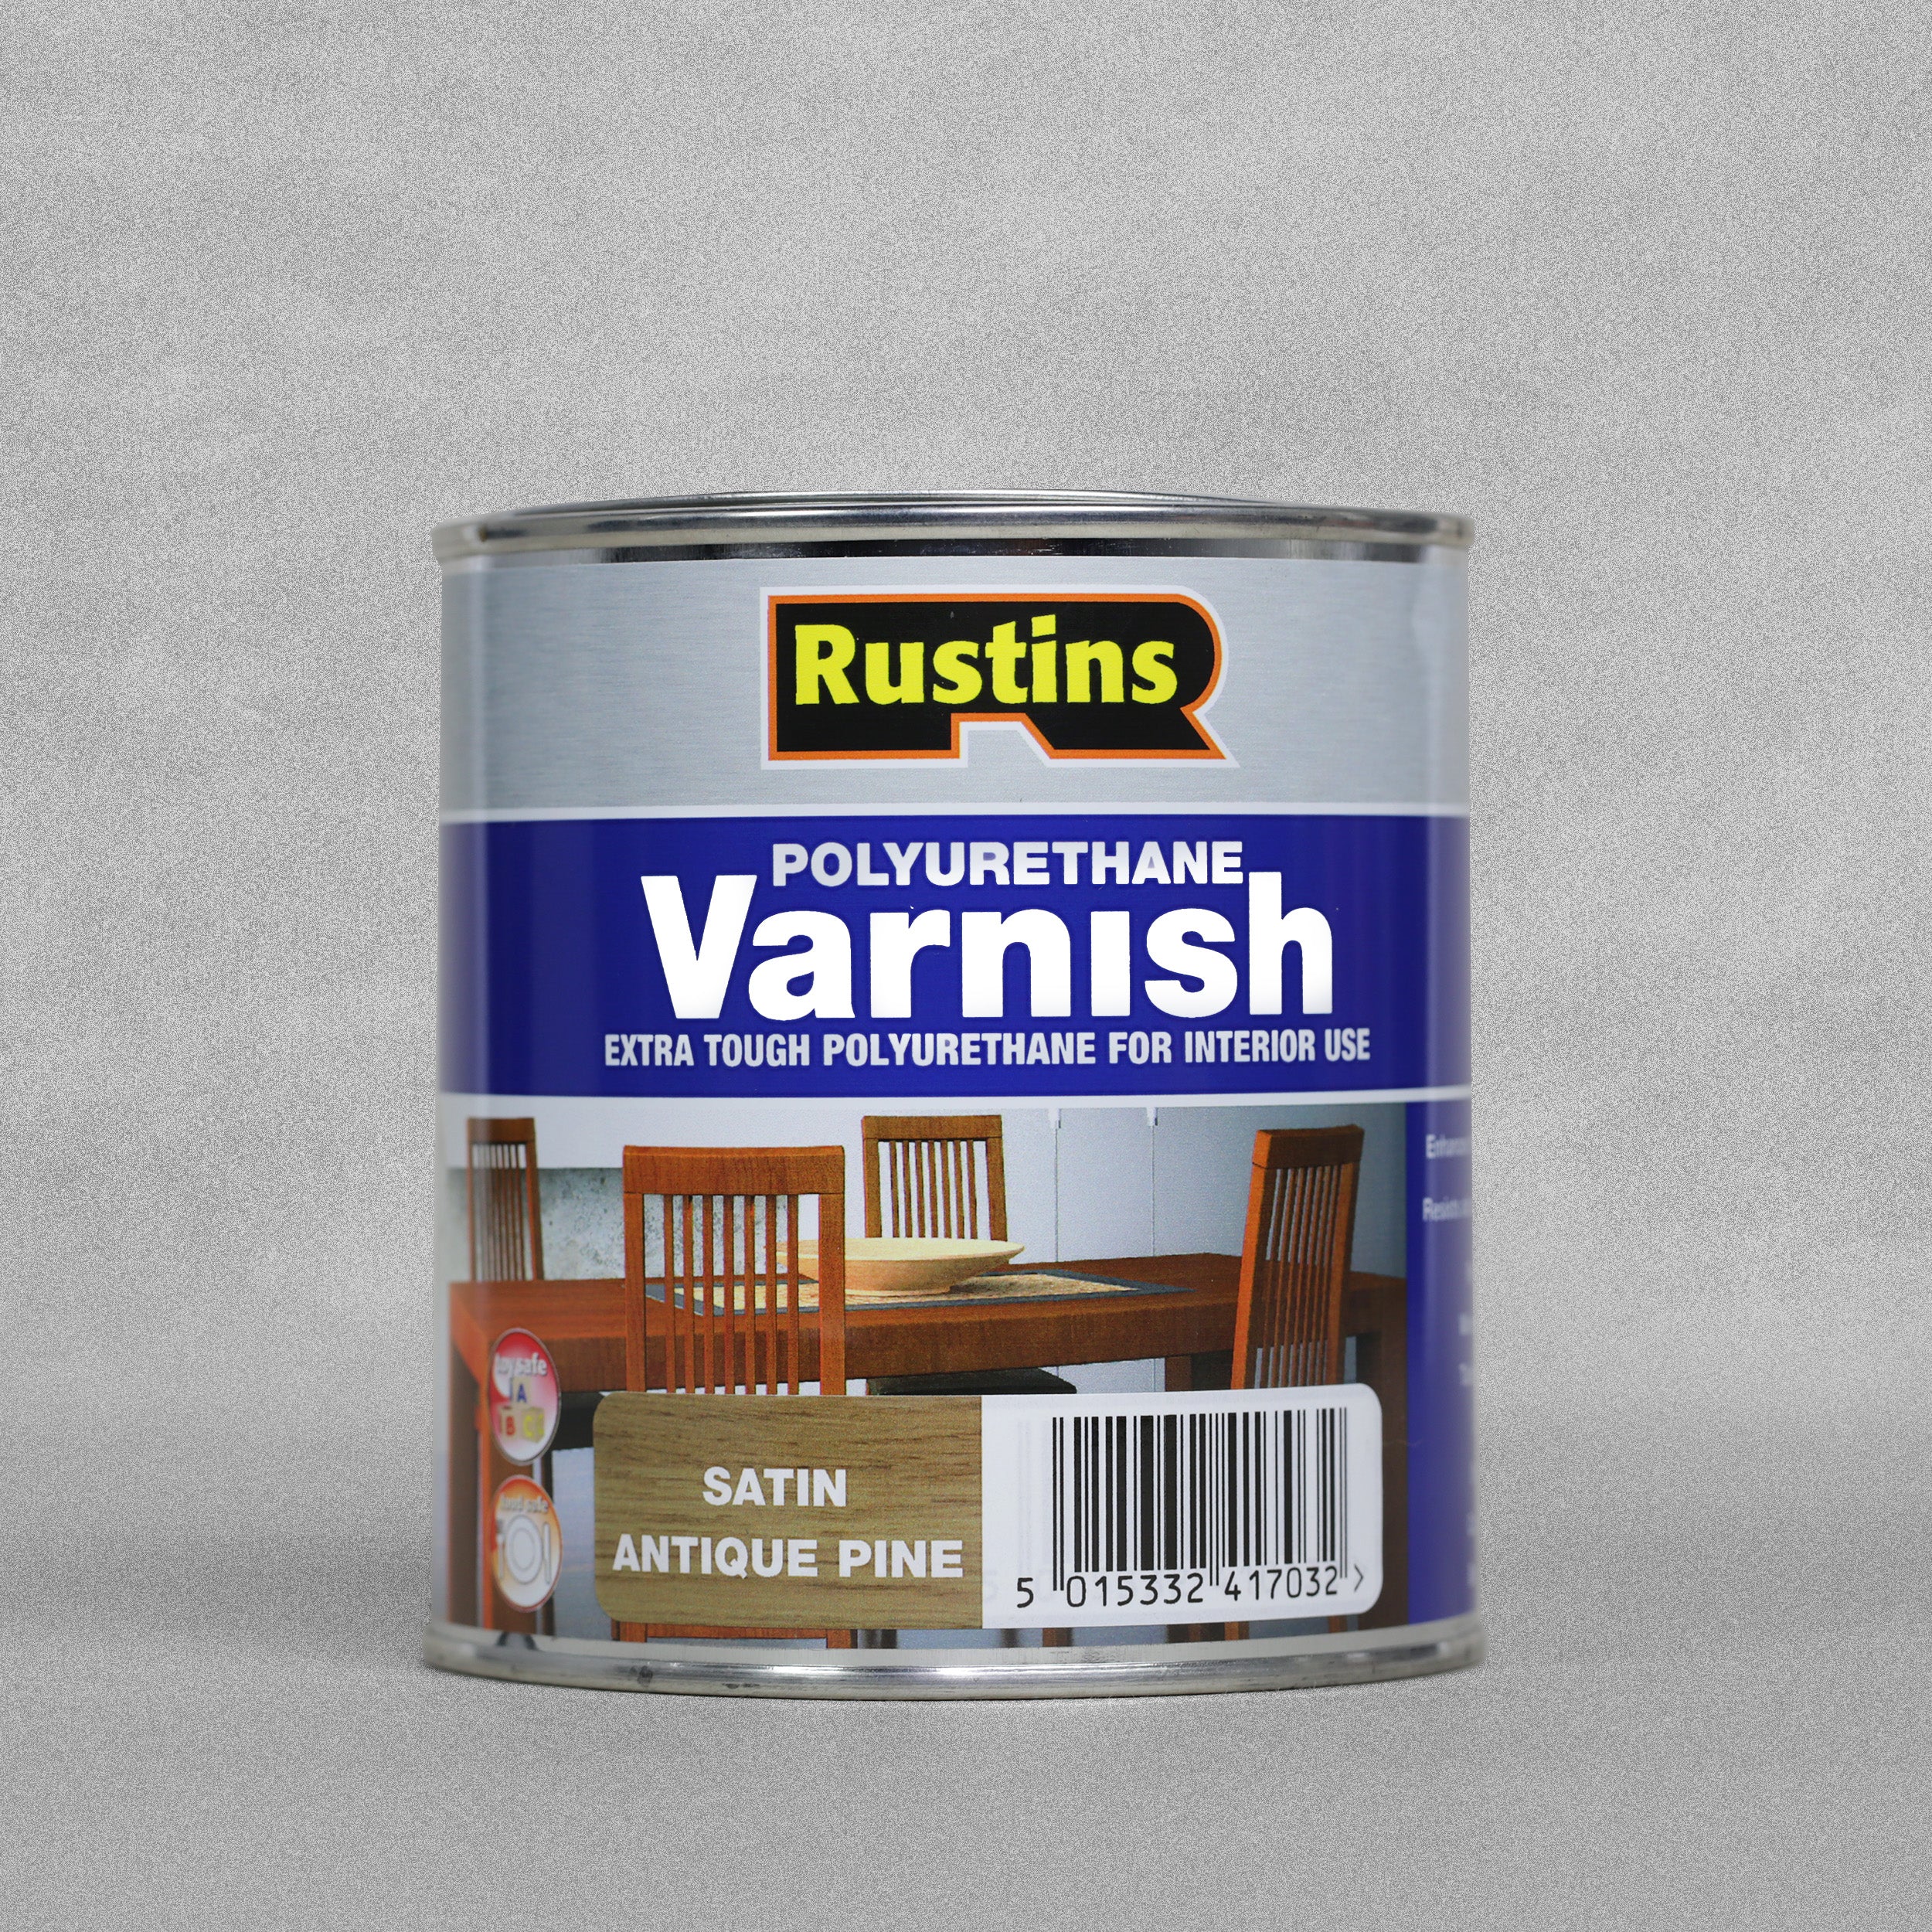 Rustins Poly Varnish - Satin Antique Pine 500ml